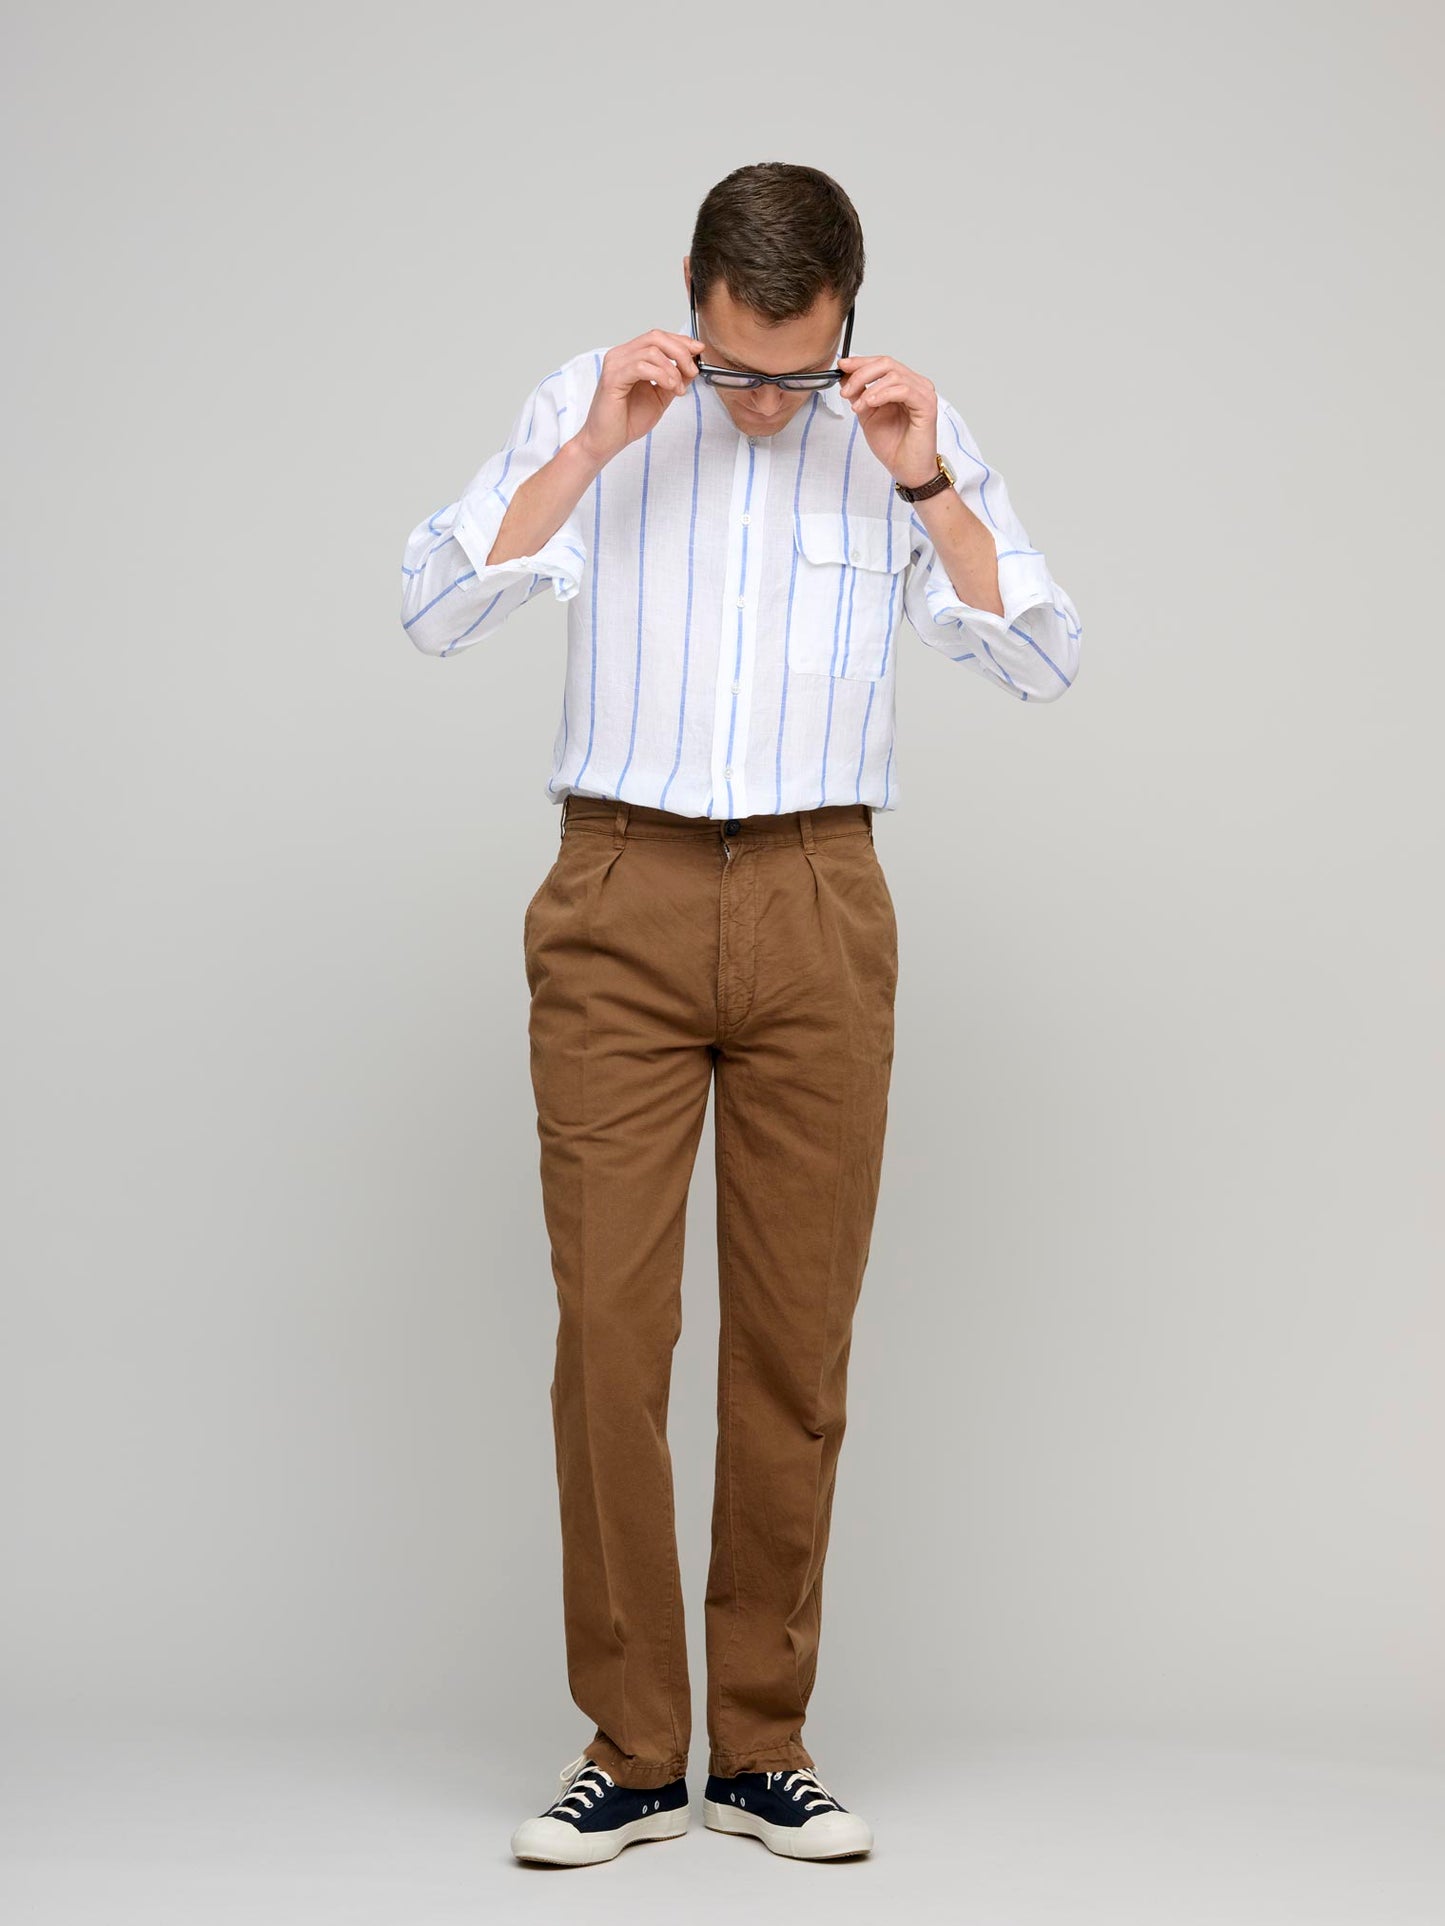 Linen Wide Stripe Shirt, White/Navy